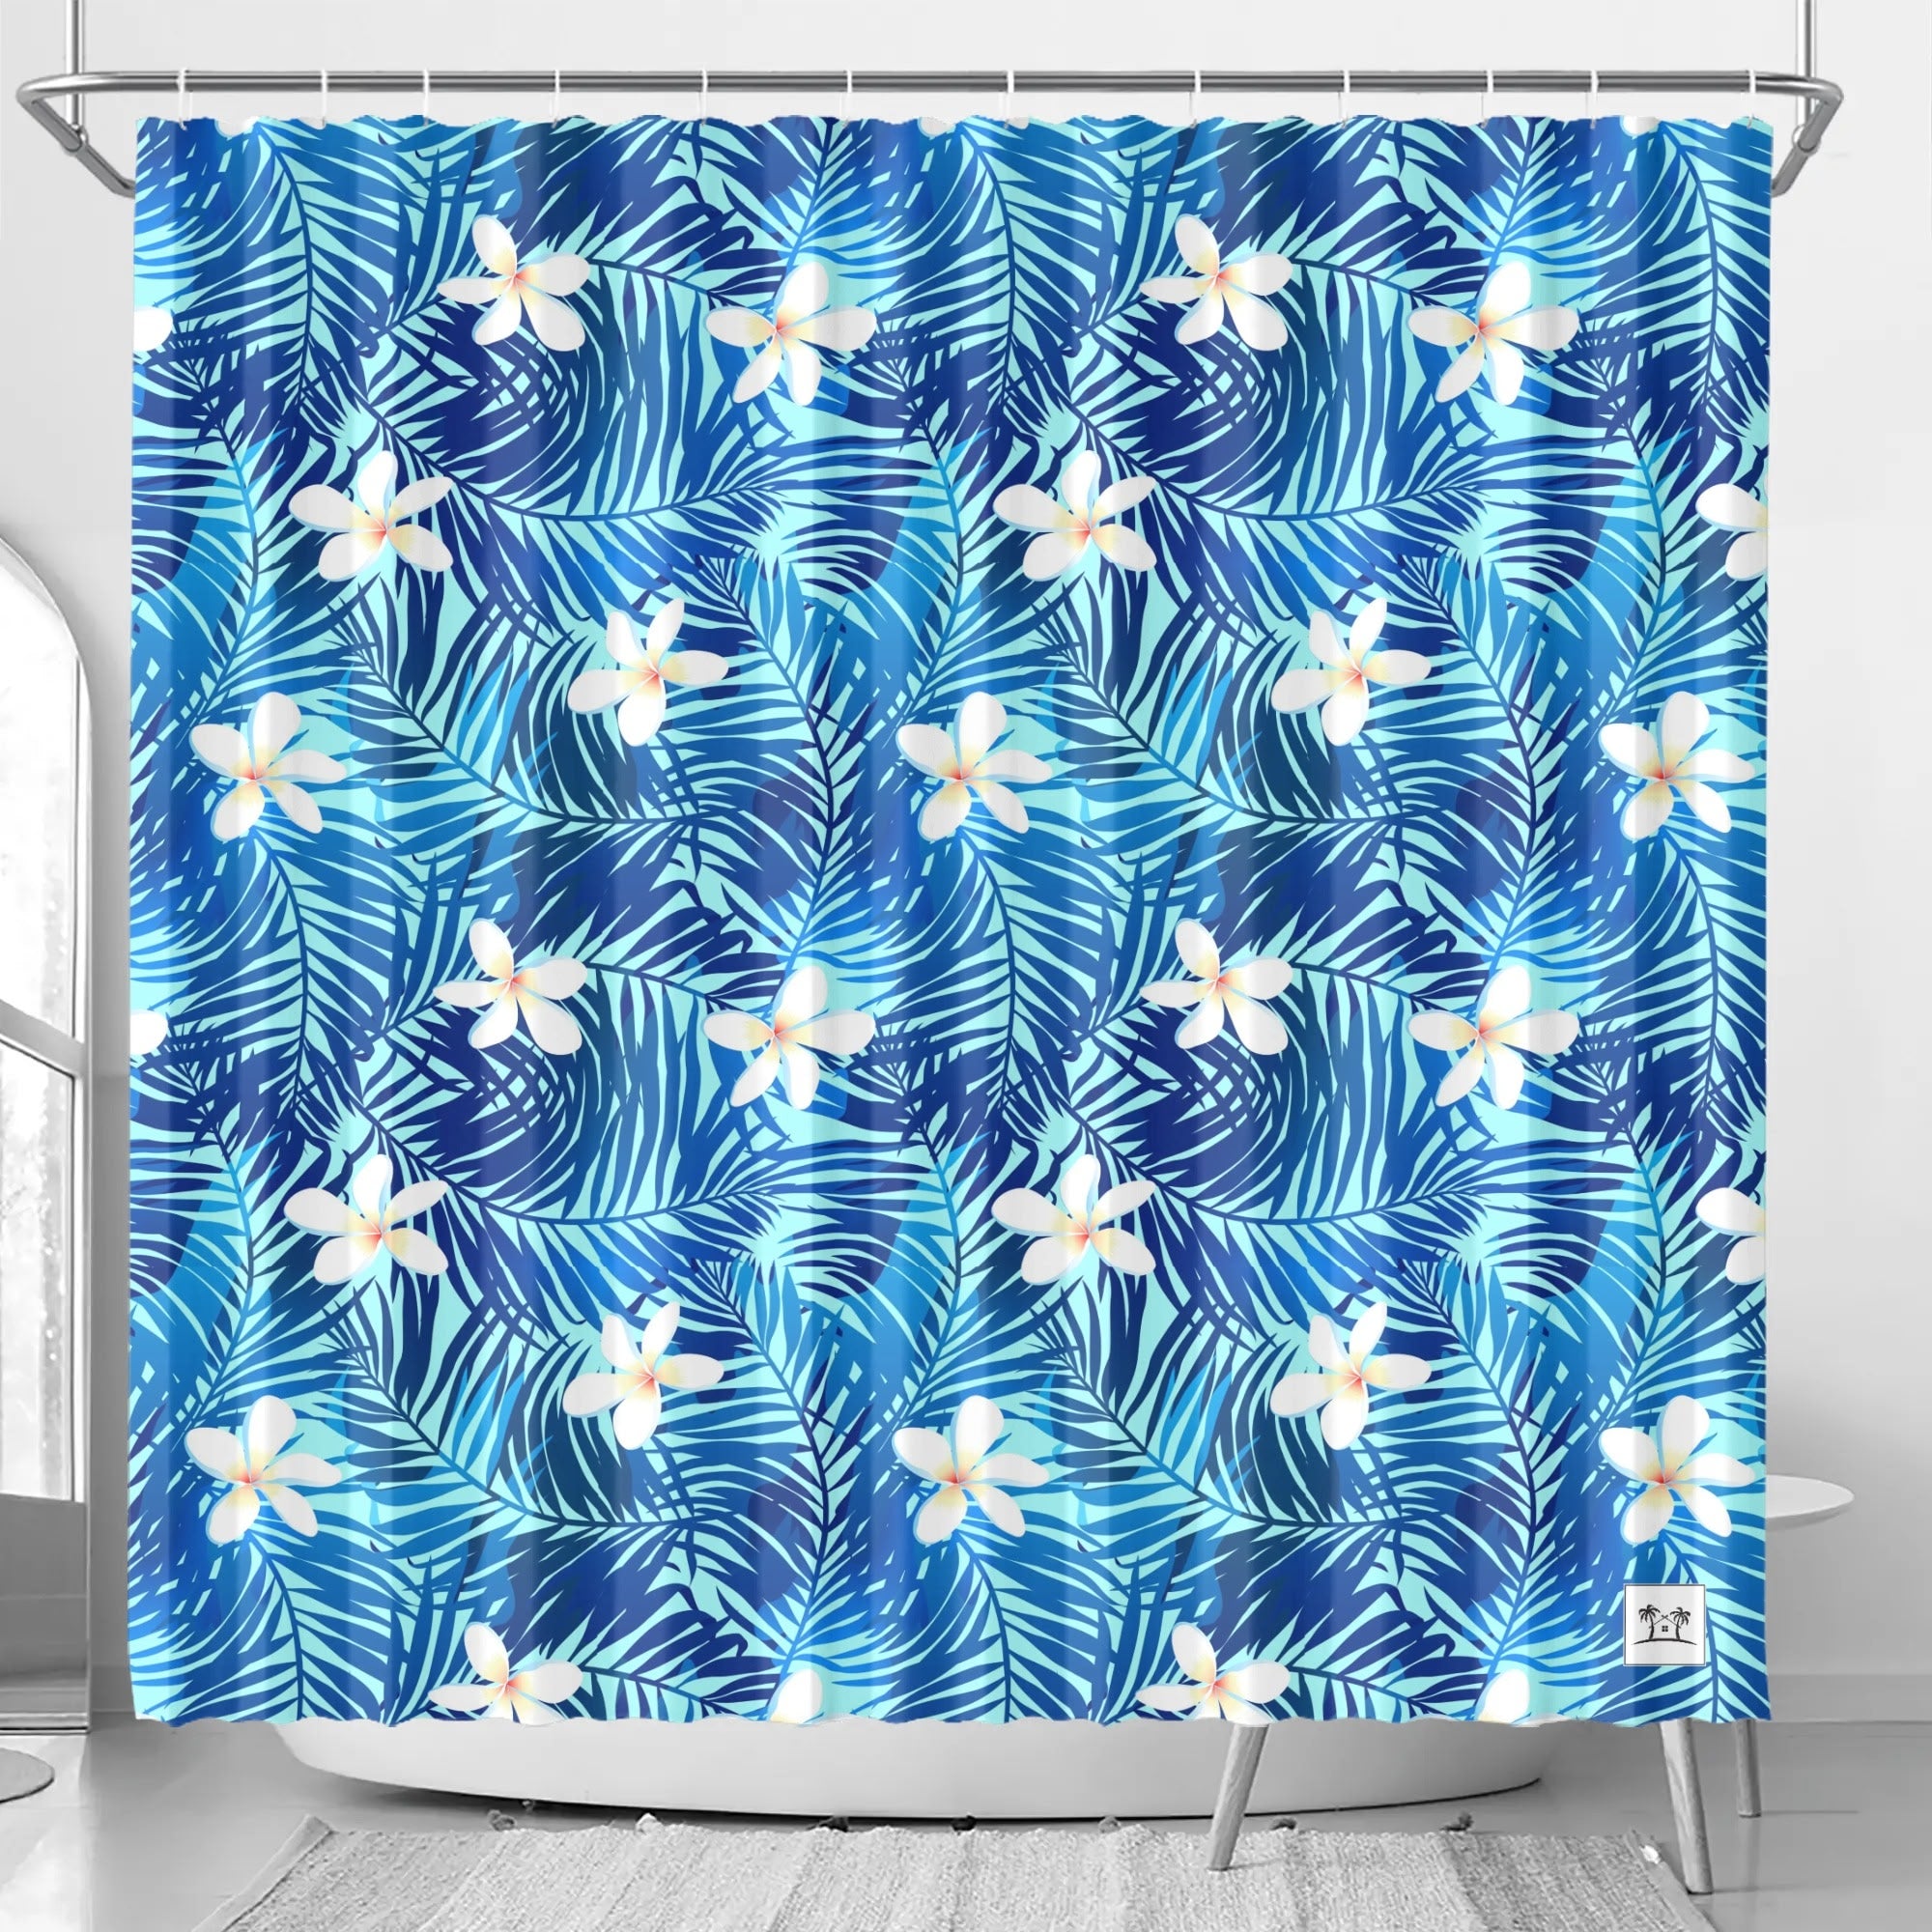 Waterproof Shower Curtain - Plumeria & Palms